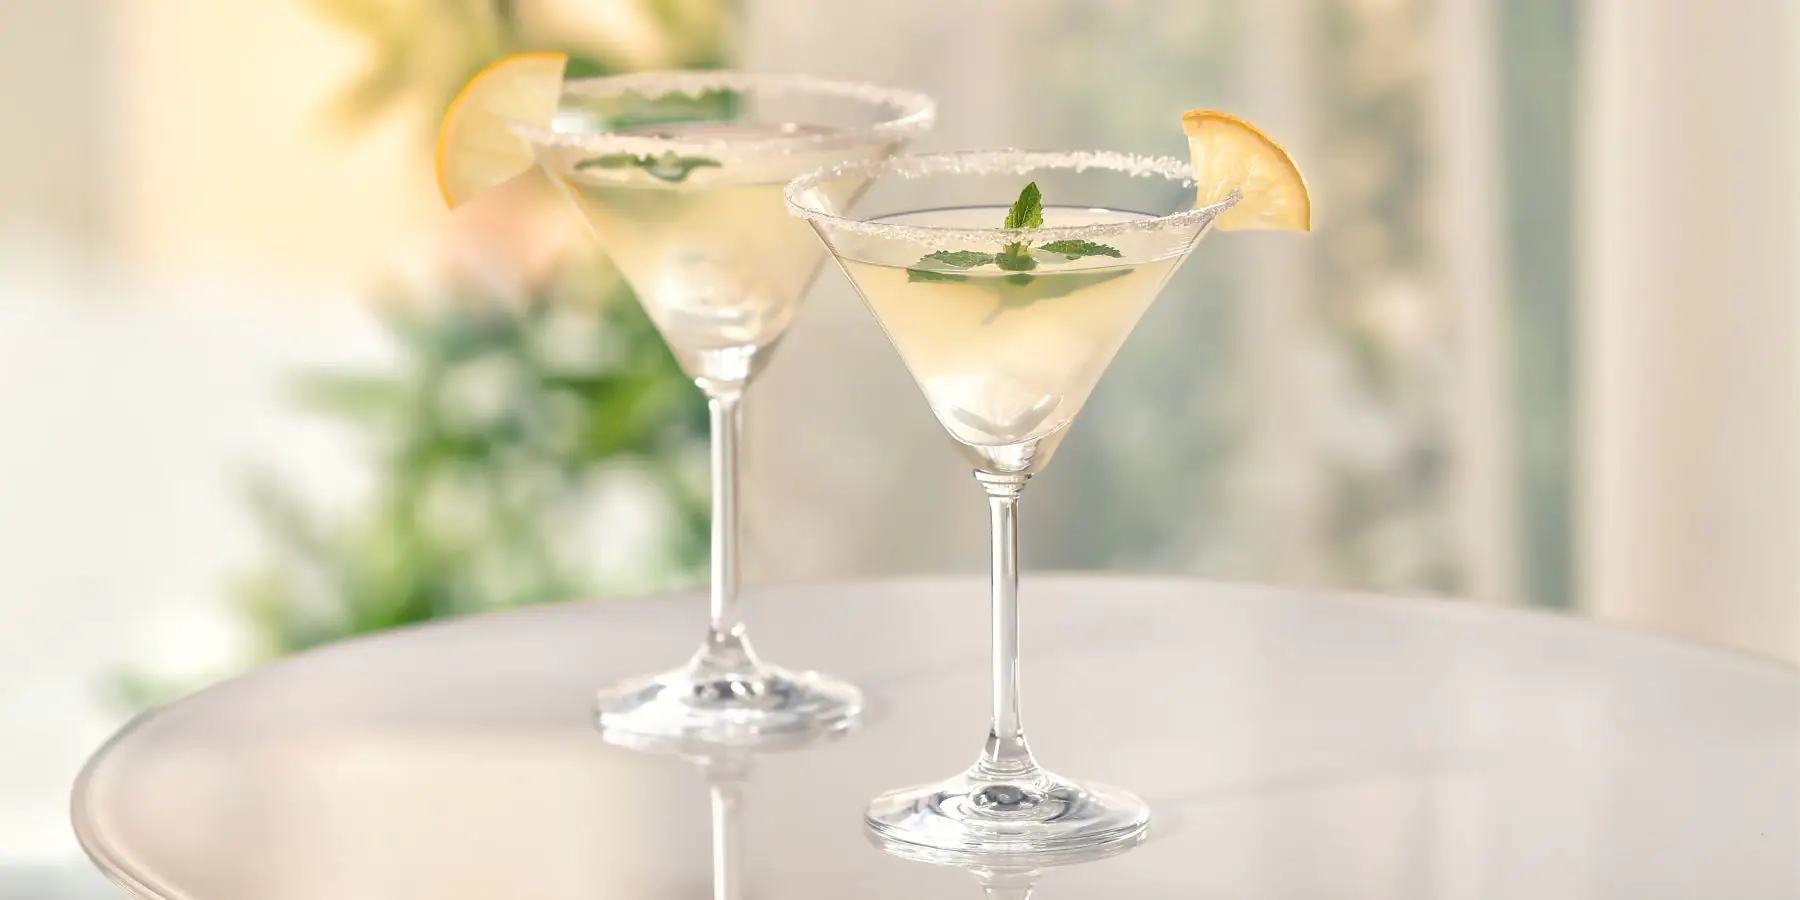 https://www.themixer.com/en-us/wp-content/uploads/sites/2/2022/08/286.US_Lemon-Drop-Martini_Canva_MAD9bjygShI-glasses-of-lemon-drop-martini-cocktail.jpg